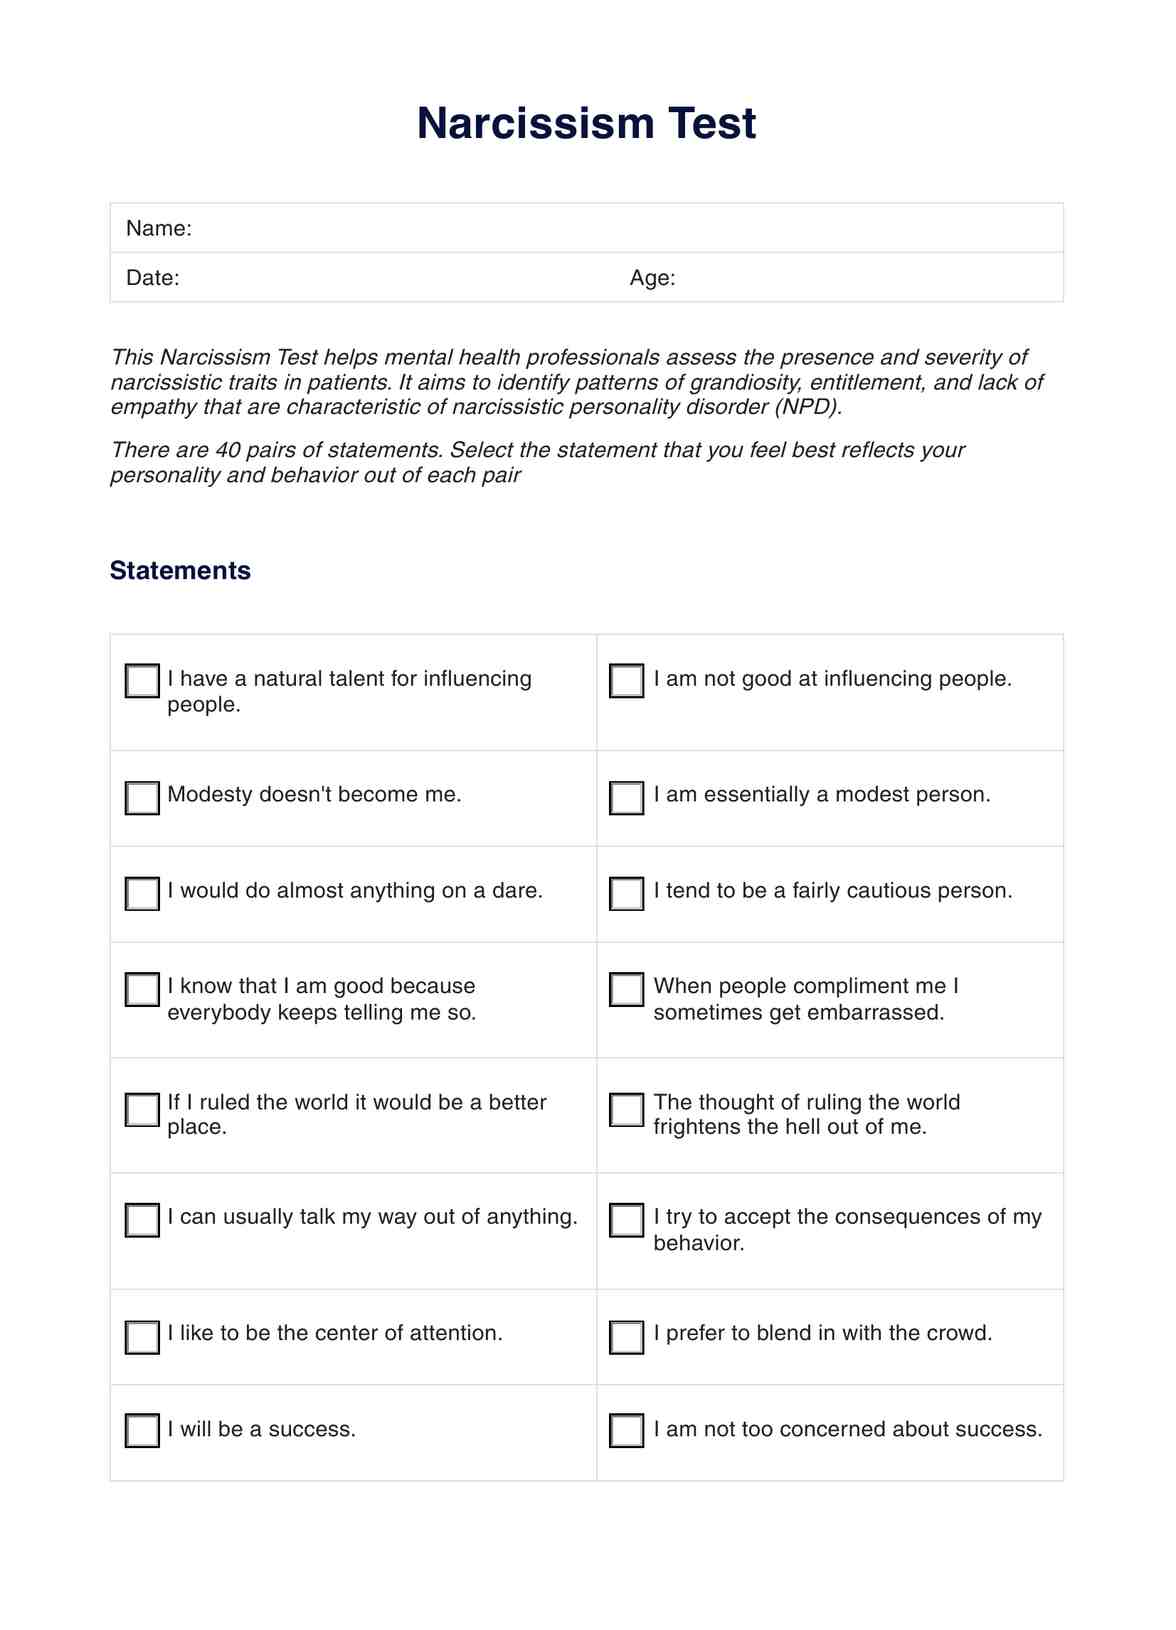 Narcissism Test PDF Example